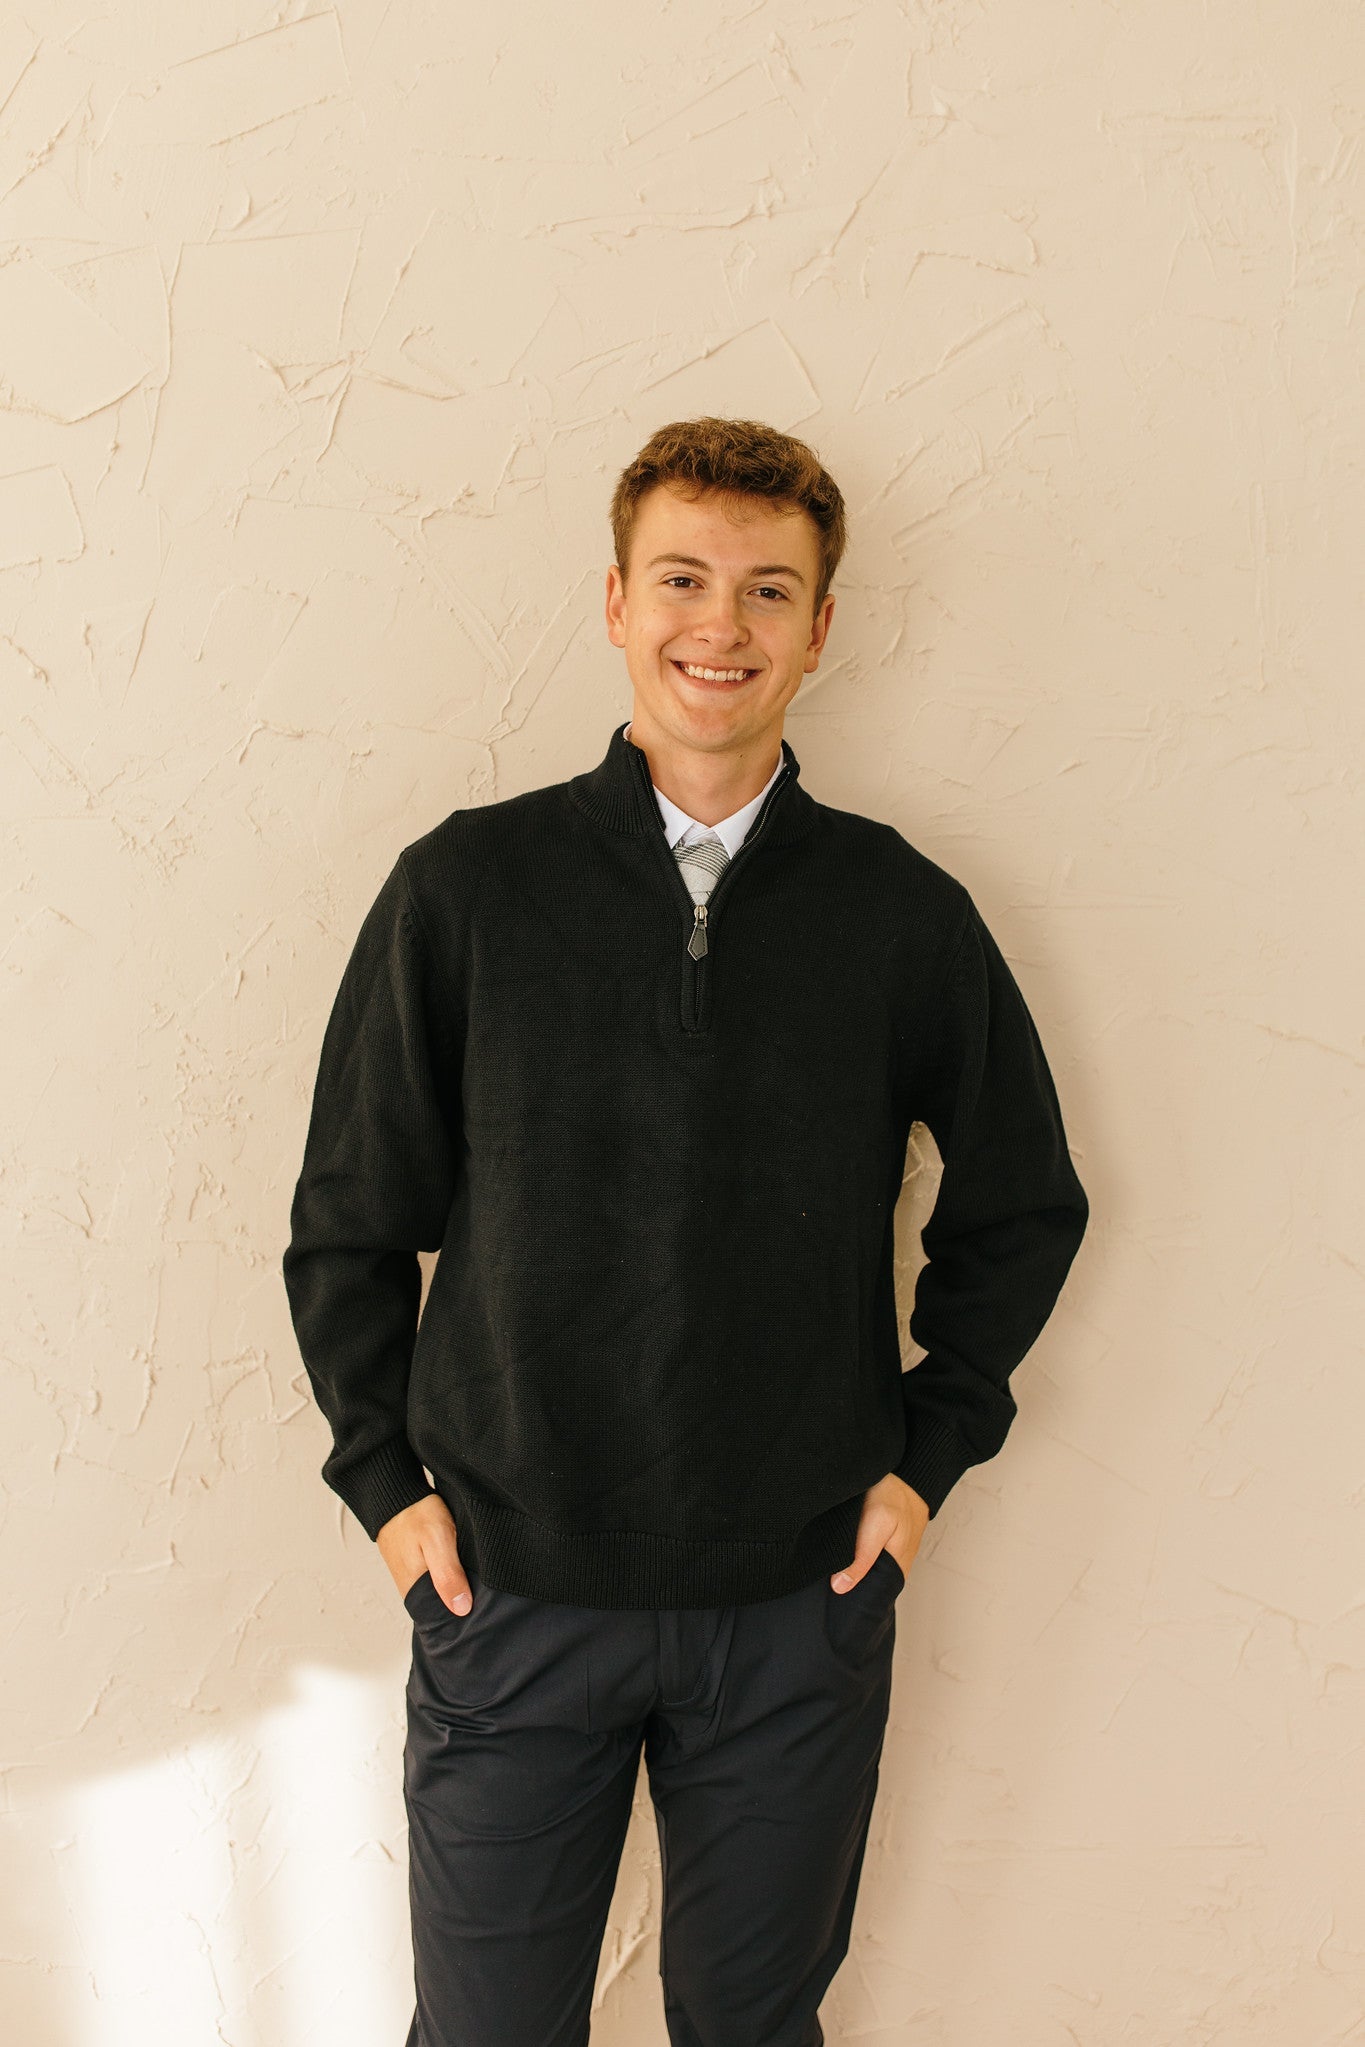 Edwards Quarter Zip - Quarter Zip Sweater